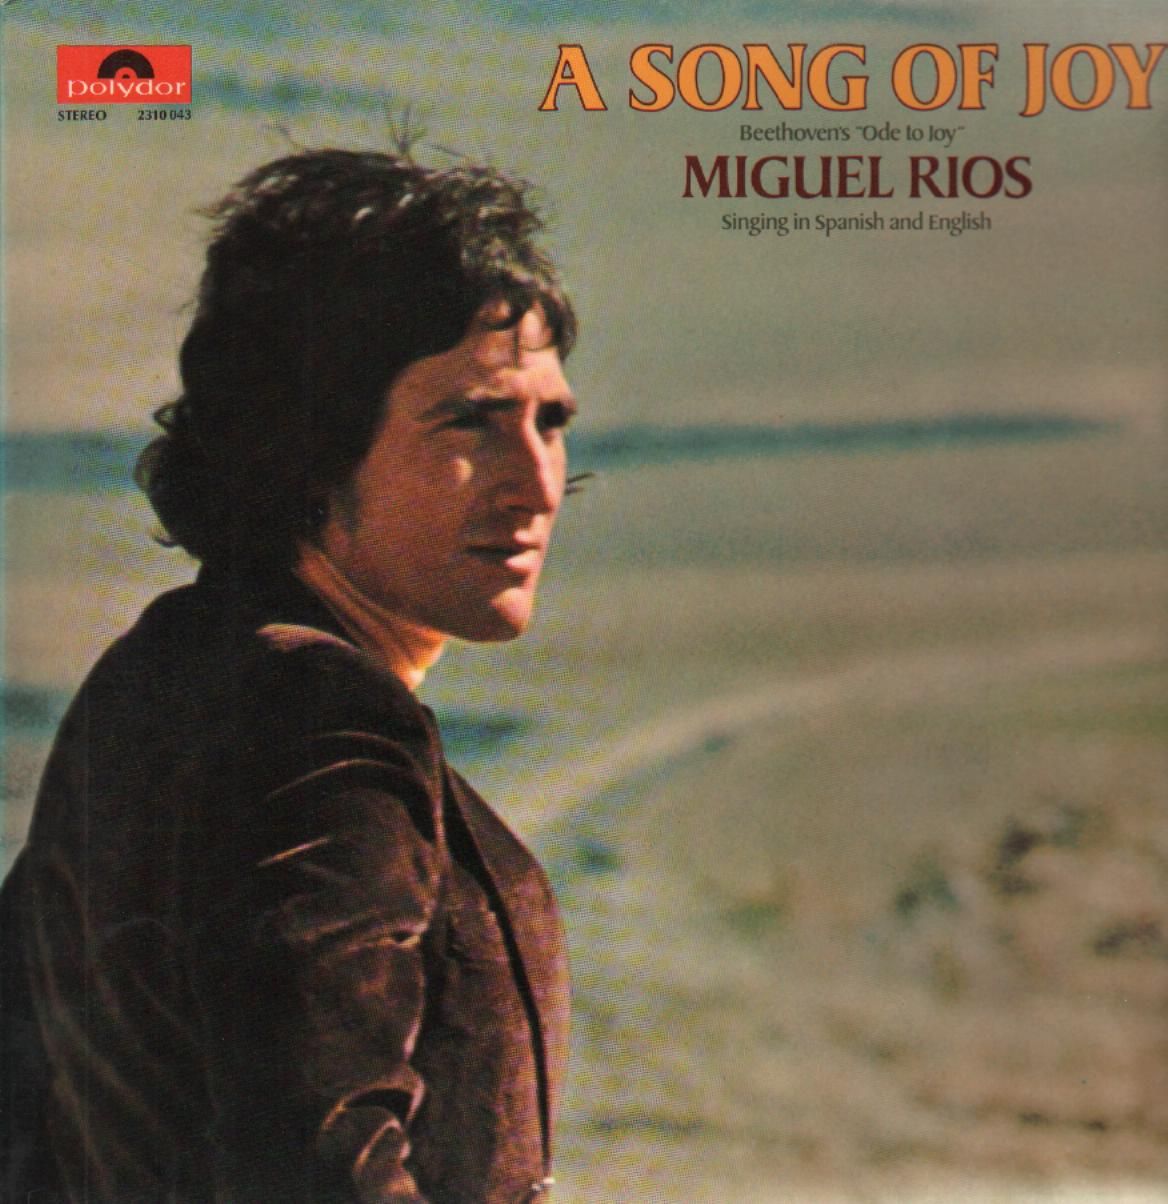 miguel_rios-a_song_of_joy_-_beethovens_ode_to_joy-_singing_.jpg